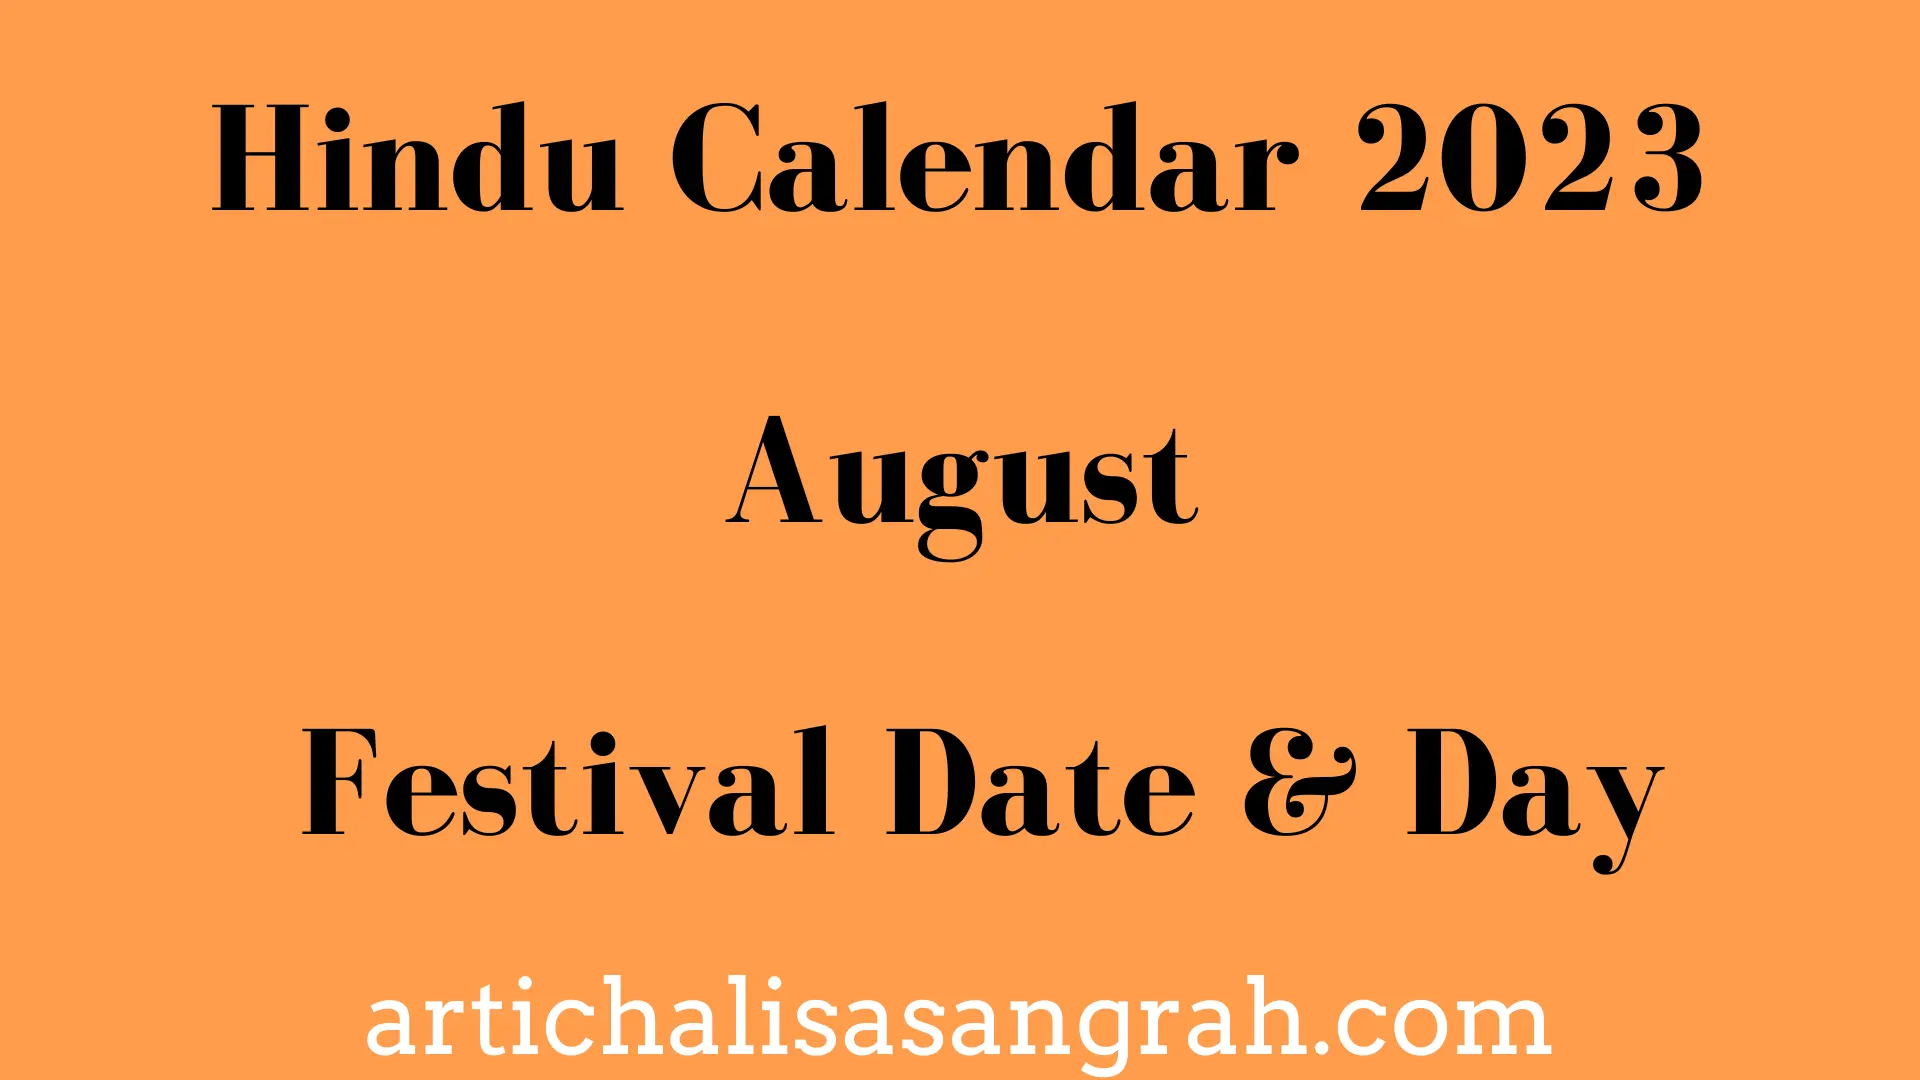 Hindu Calendar August 2023